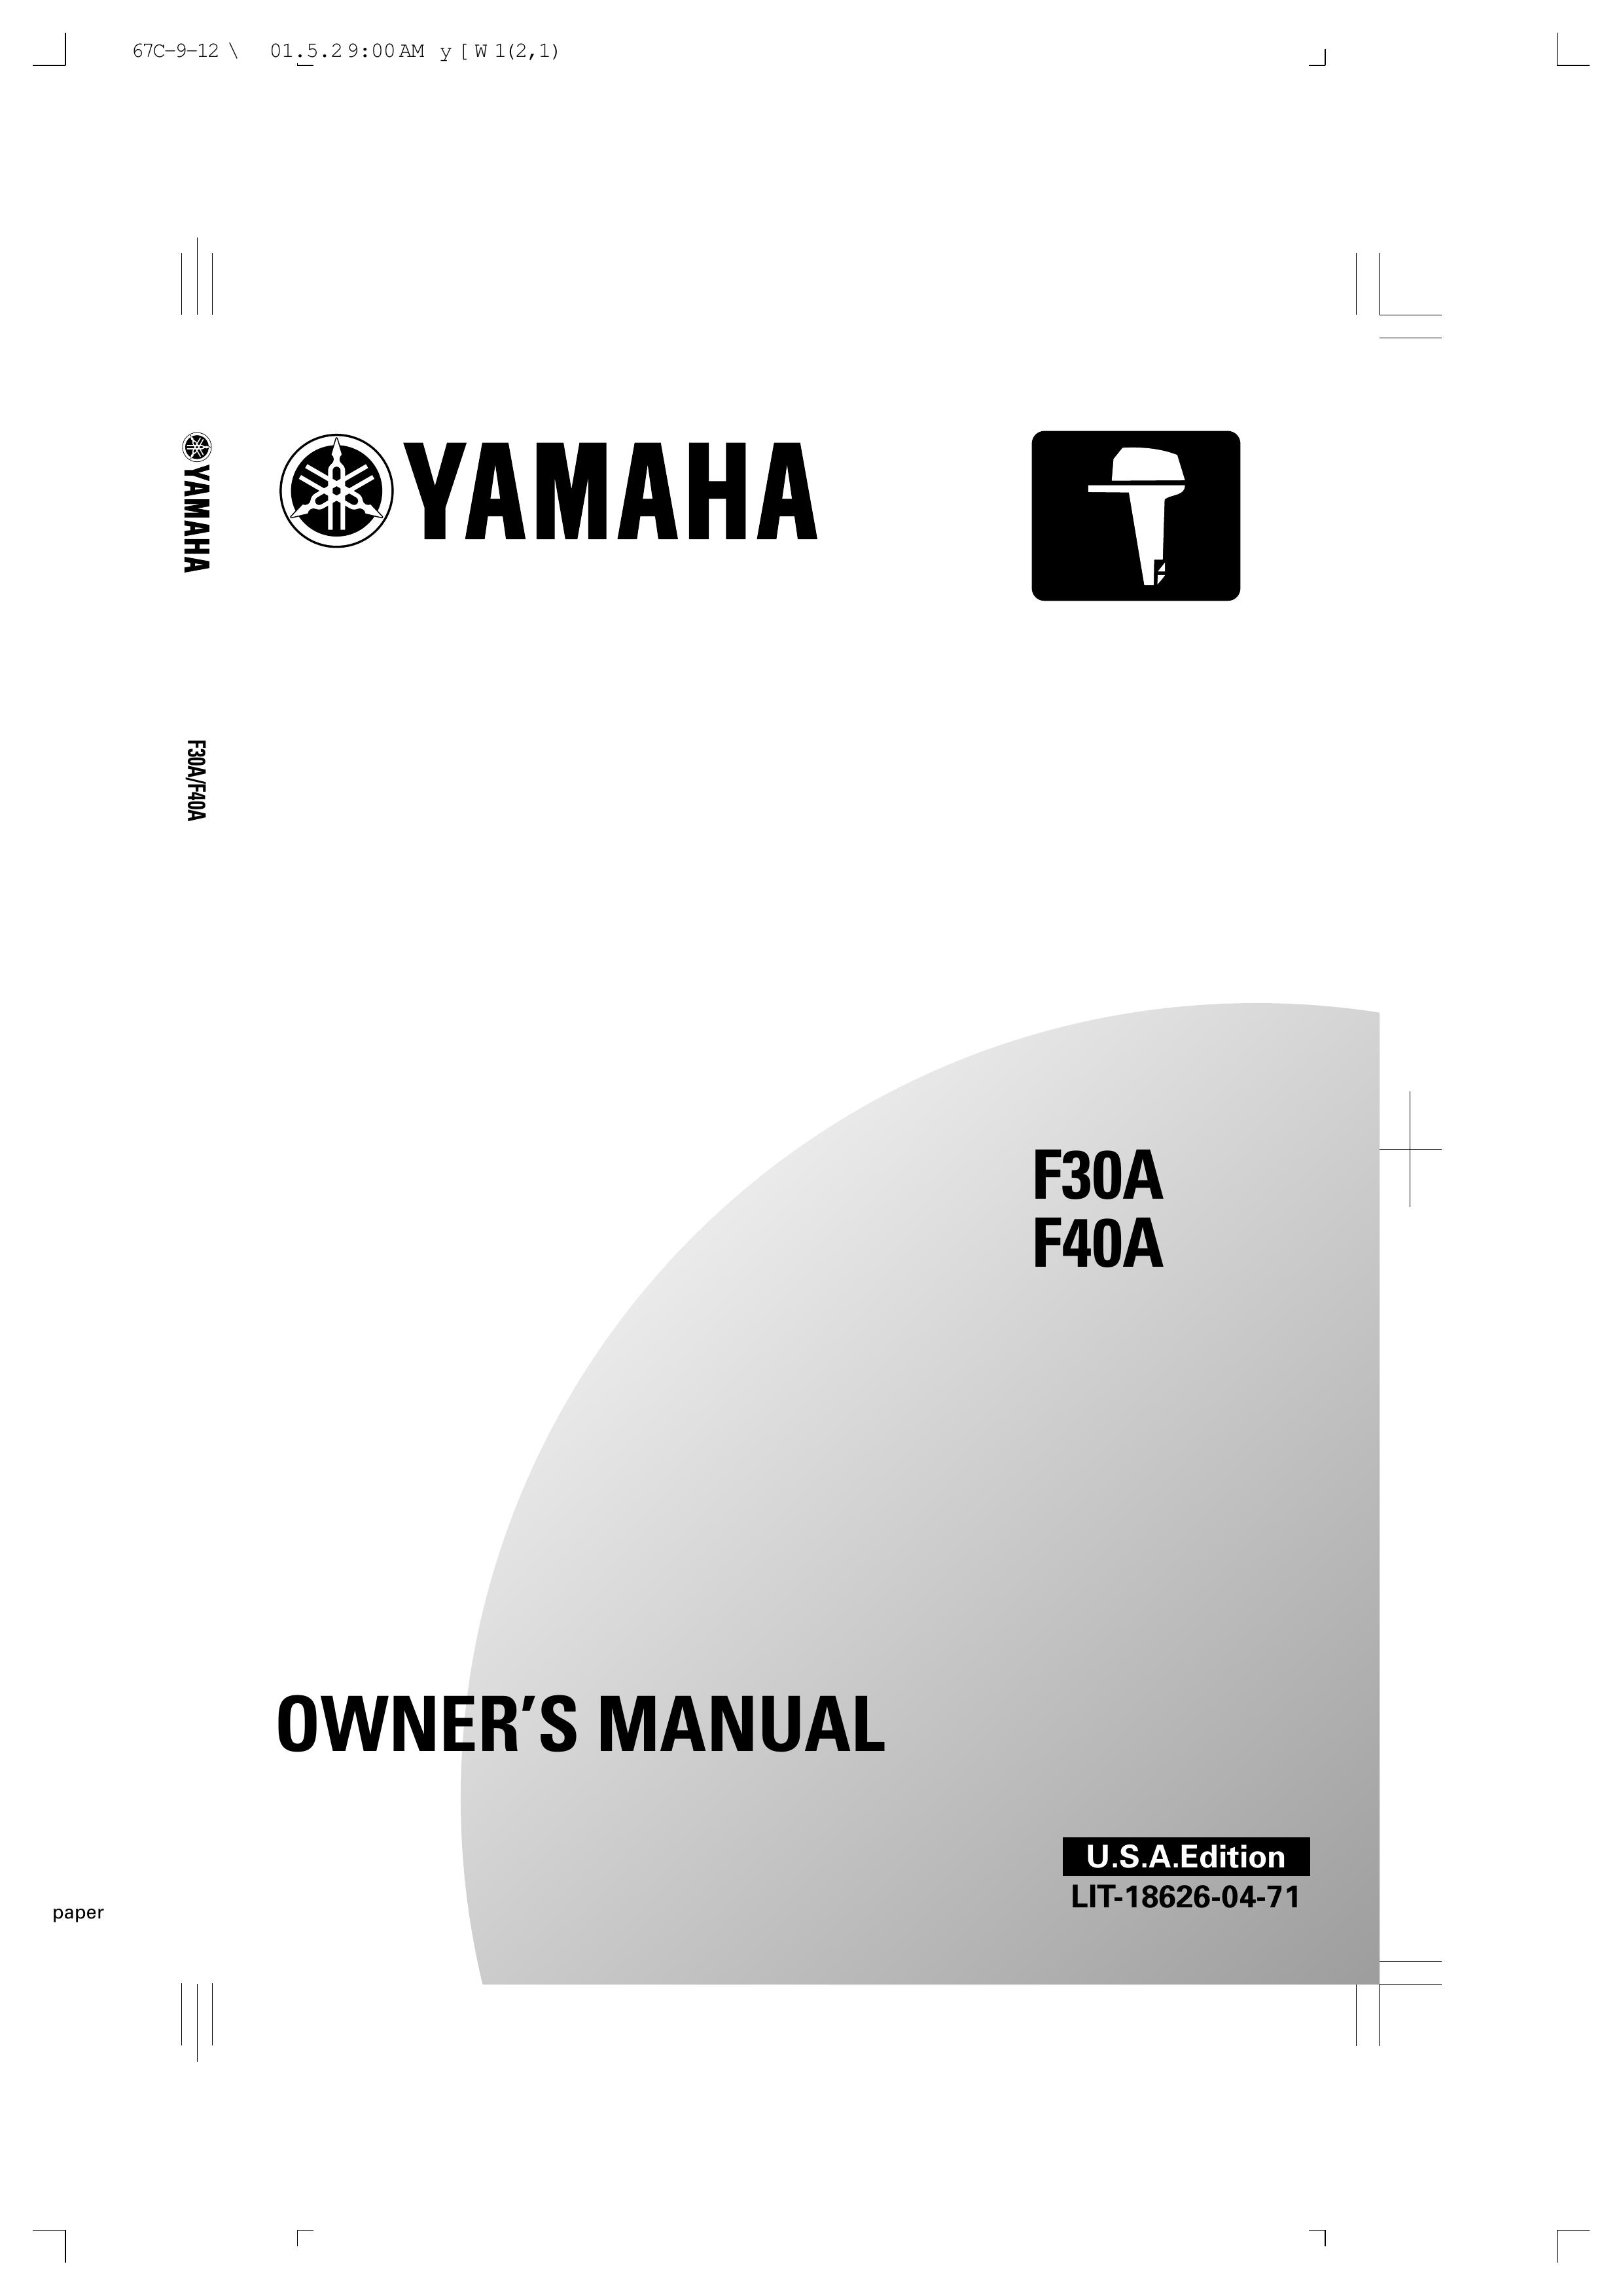 Yamaha F30A Outboard Motor User Manual